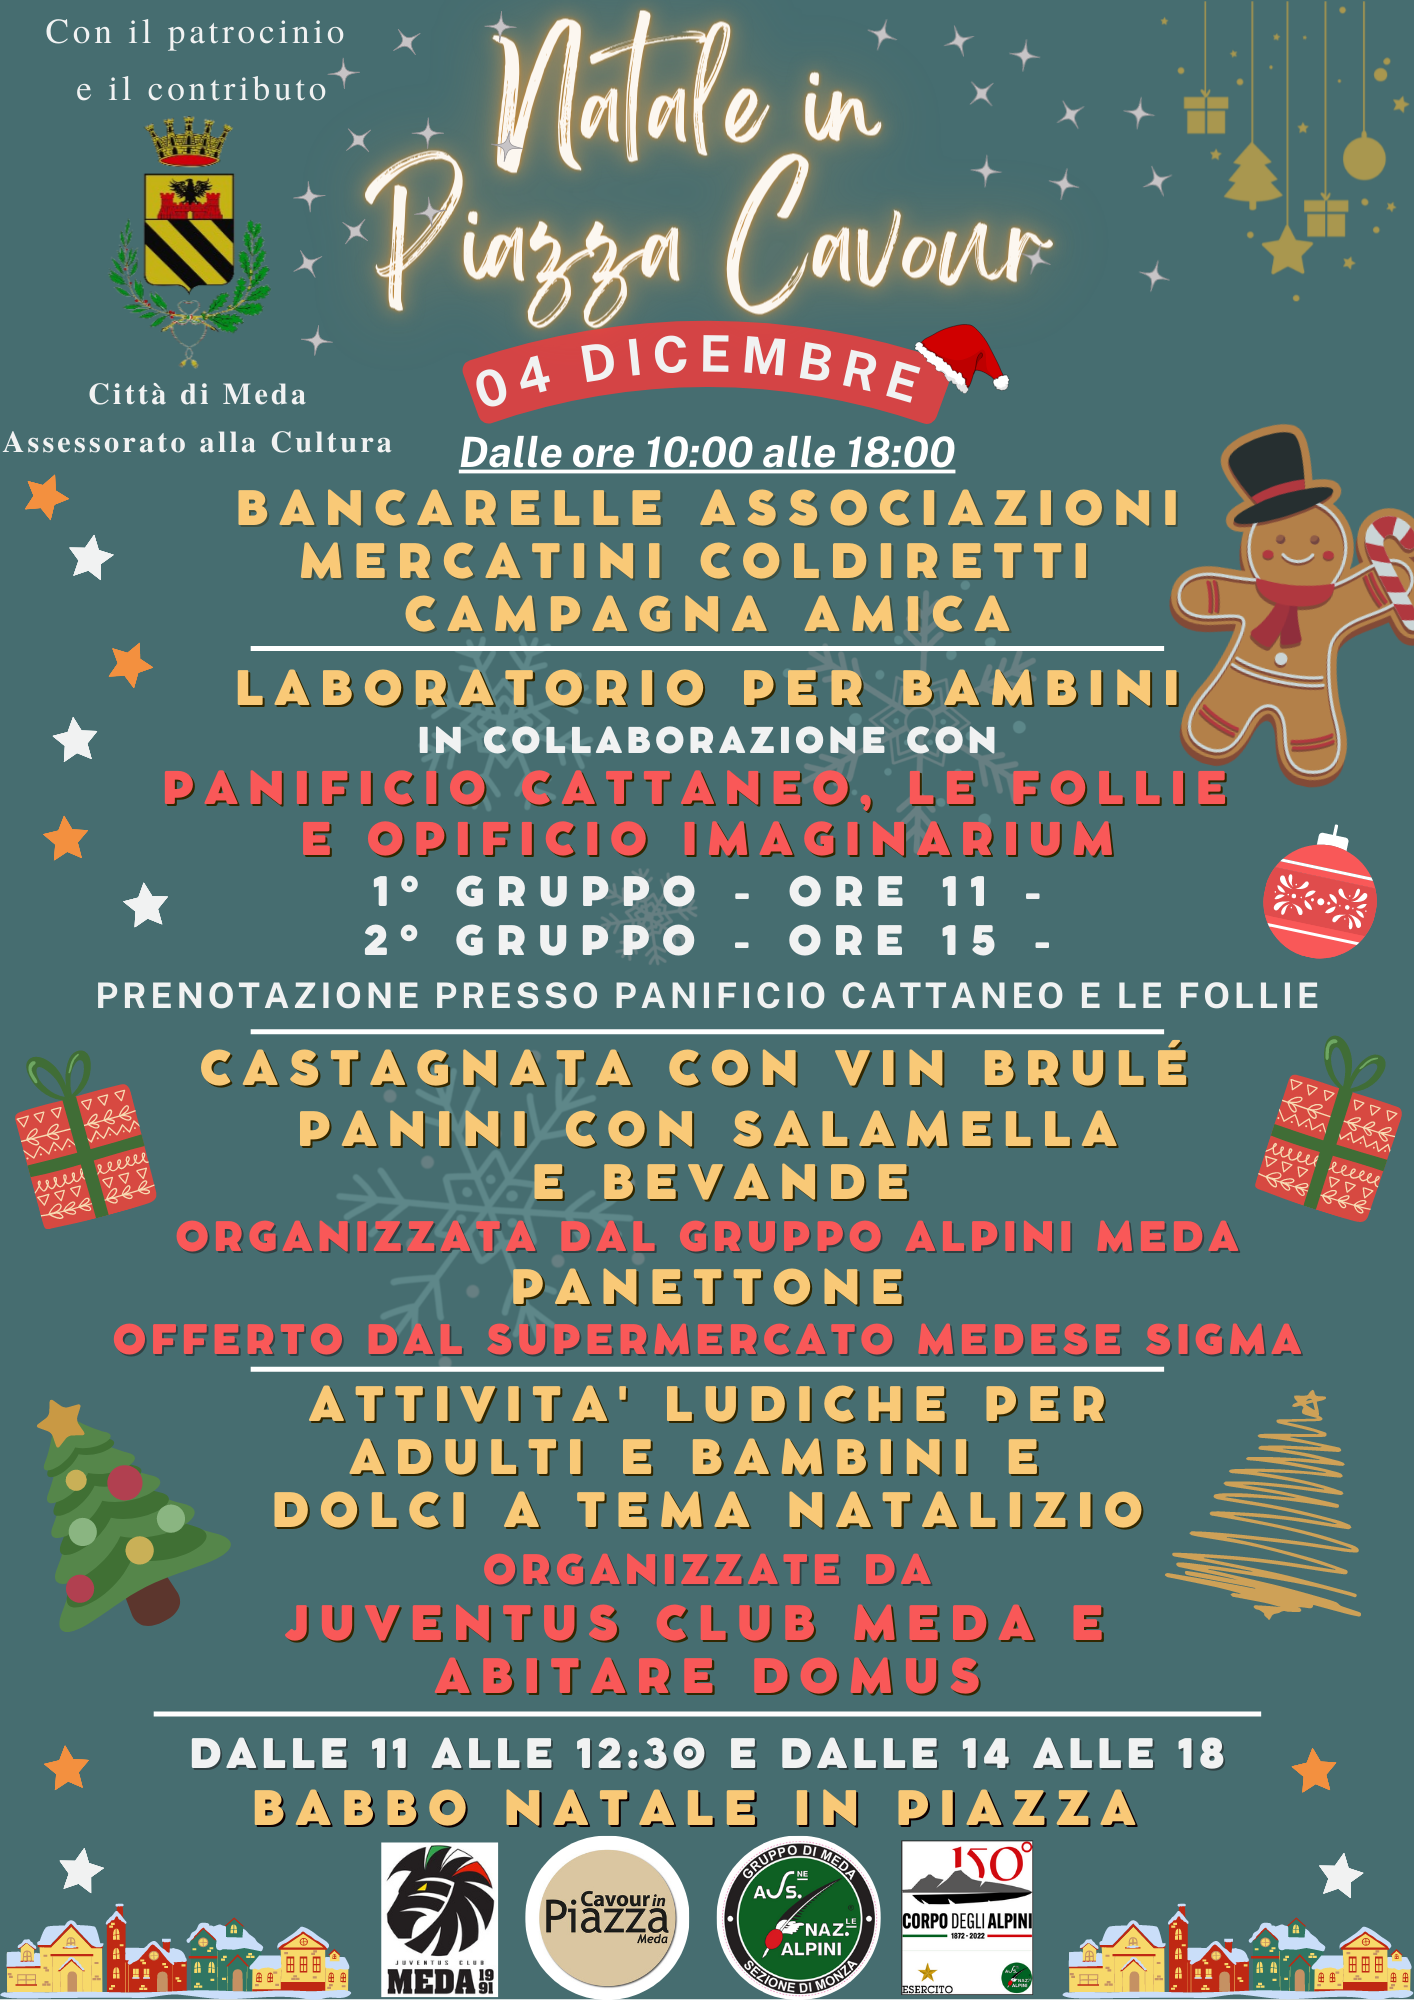 immagine Natale in Piazza Cavour